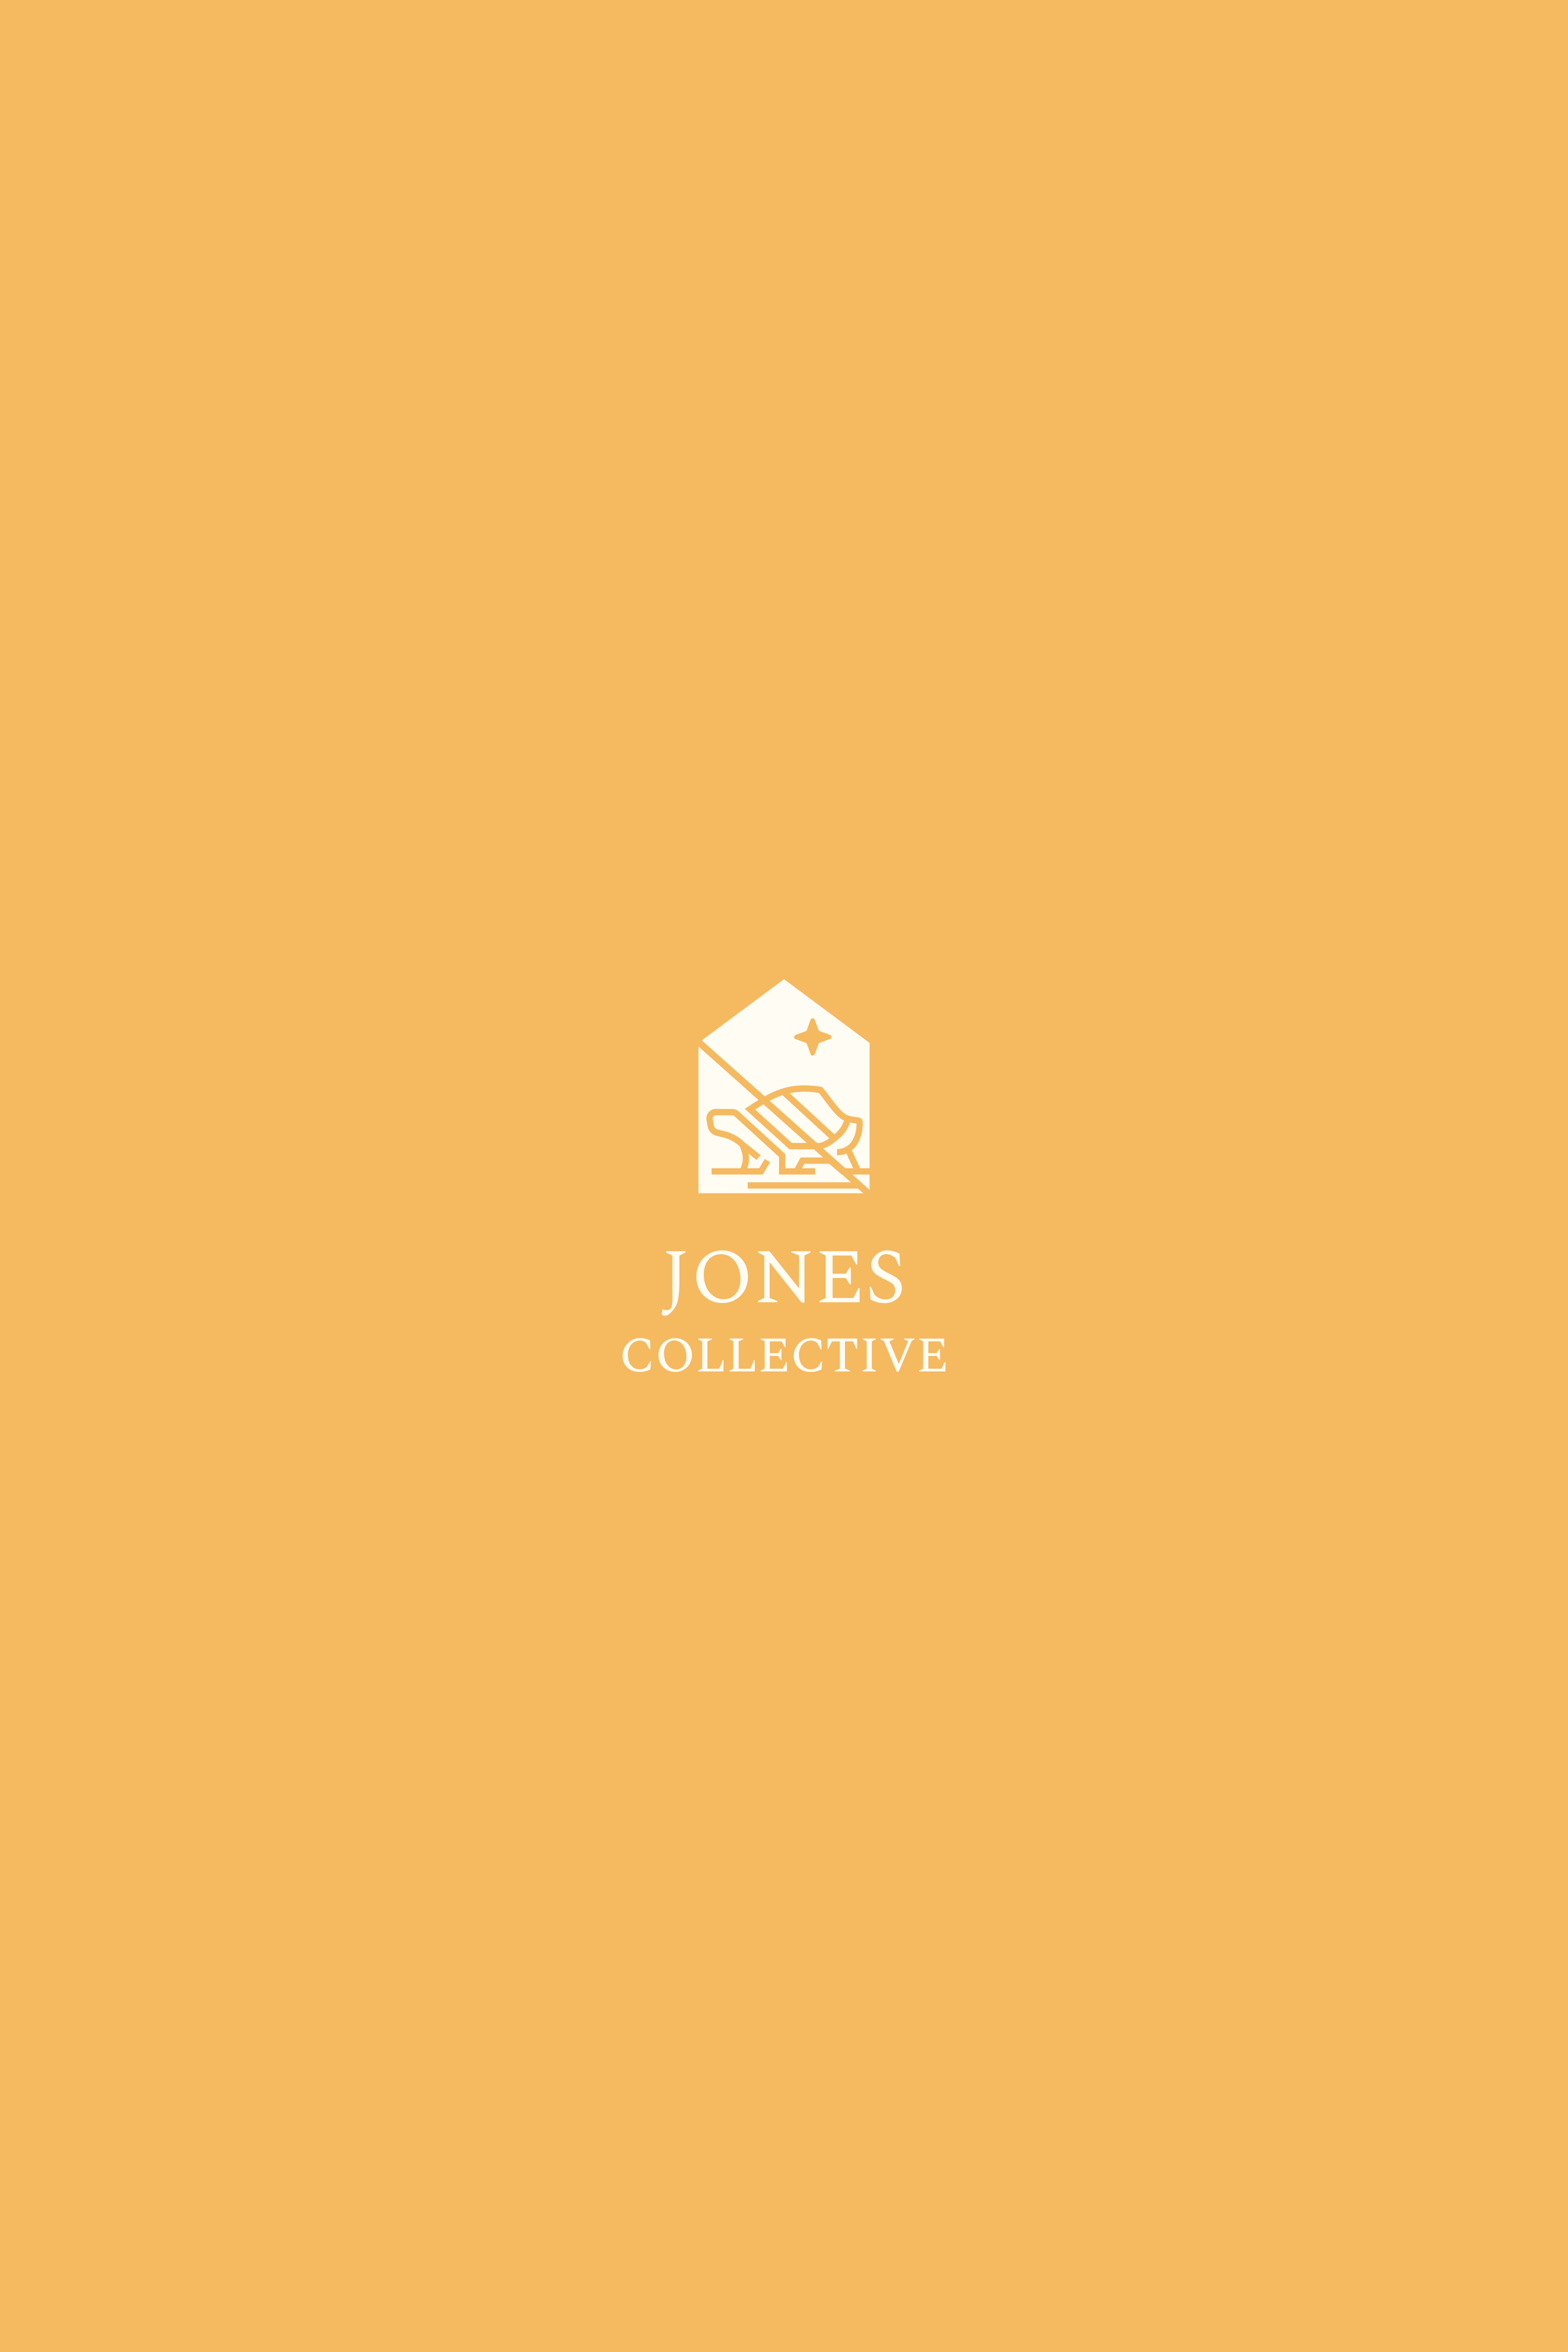 jones collective logo